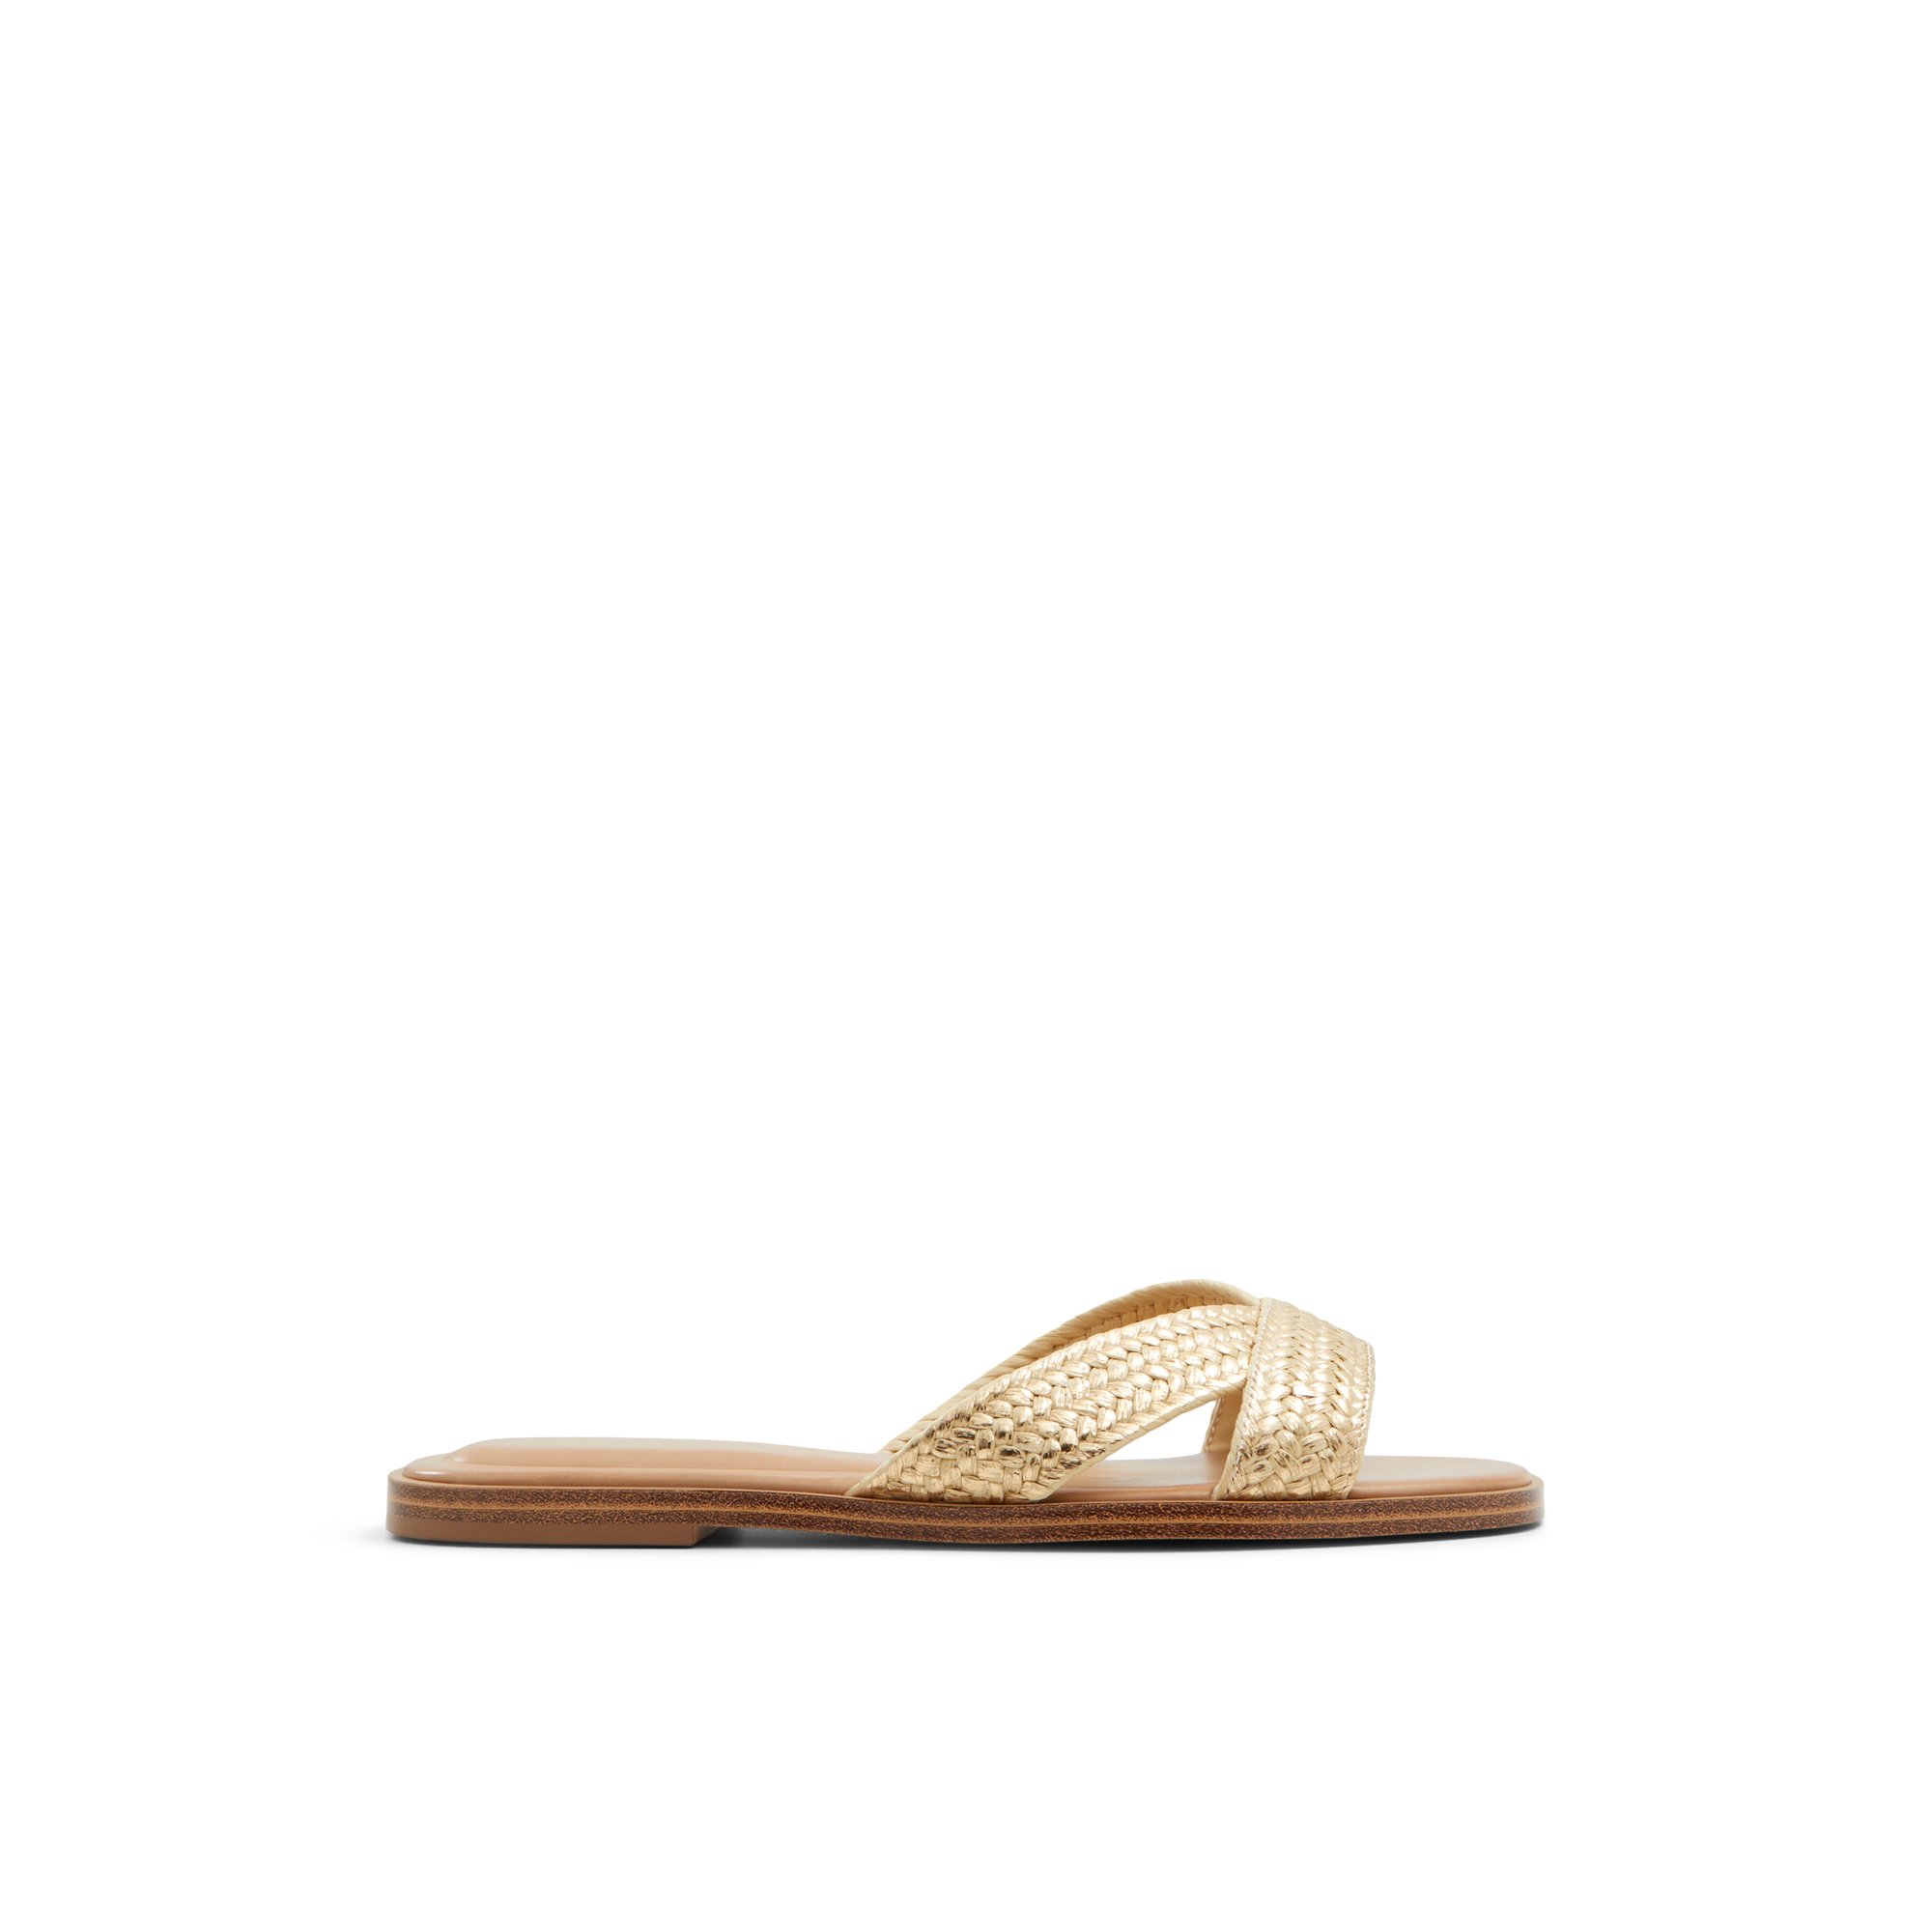 ALDO Caria - Women's Flat Sandals - Gold